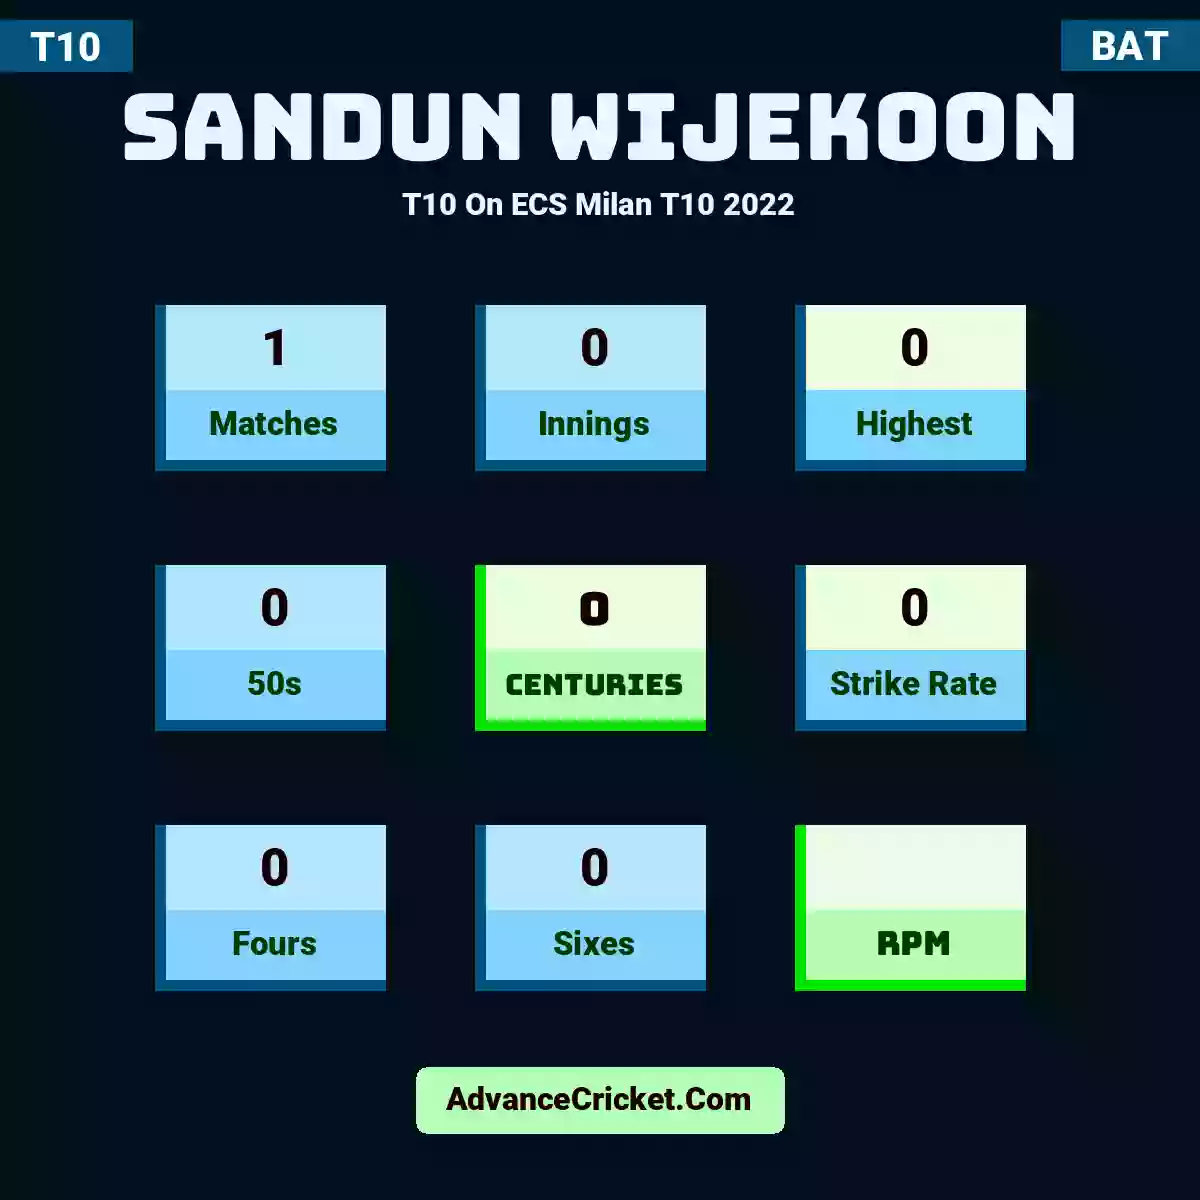 Sandun Wijekoon T10  On ECS Milan T10 2022, Sandun Wijekoon played 1 matches, scored 0 runs as highest, 0 half-centuries, and 0 centuries, with a strike rate of 0. S.Wijekoon hit 0 fours and 0 sixes.